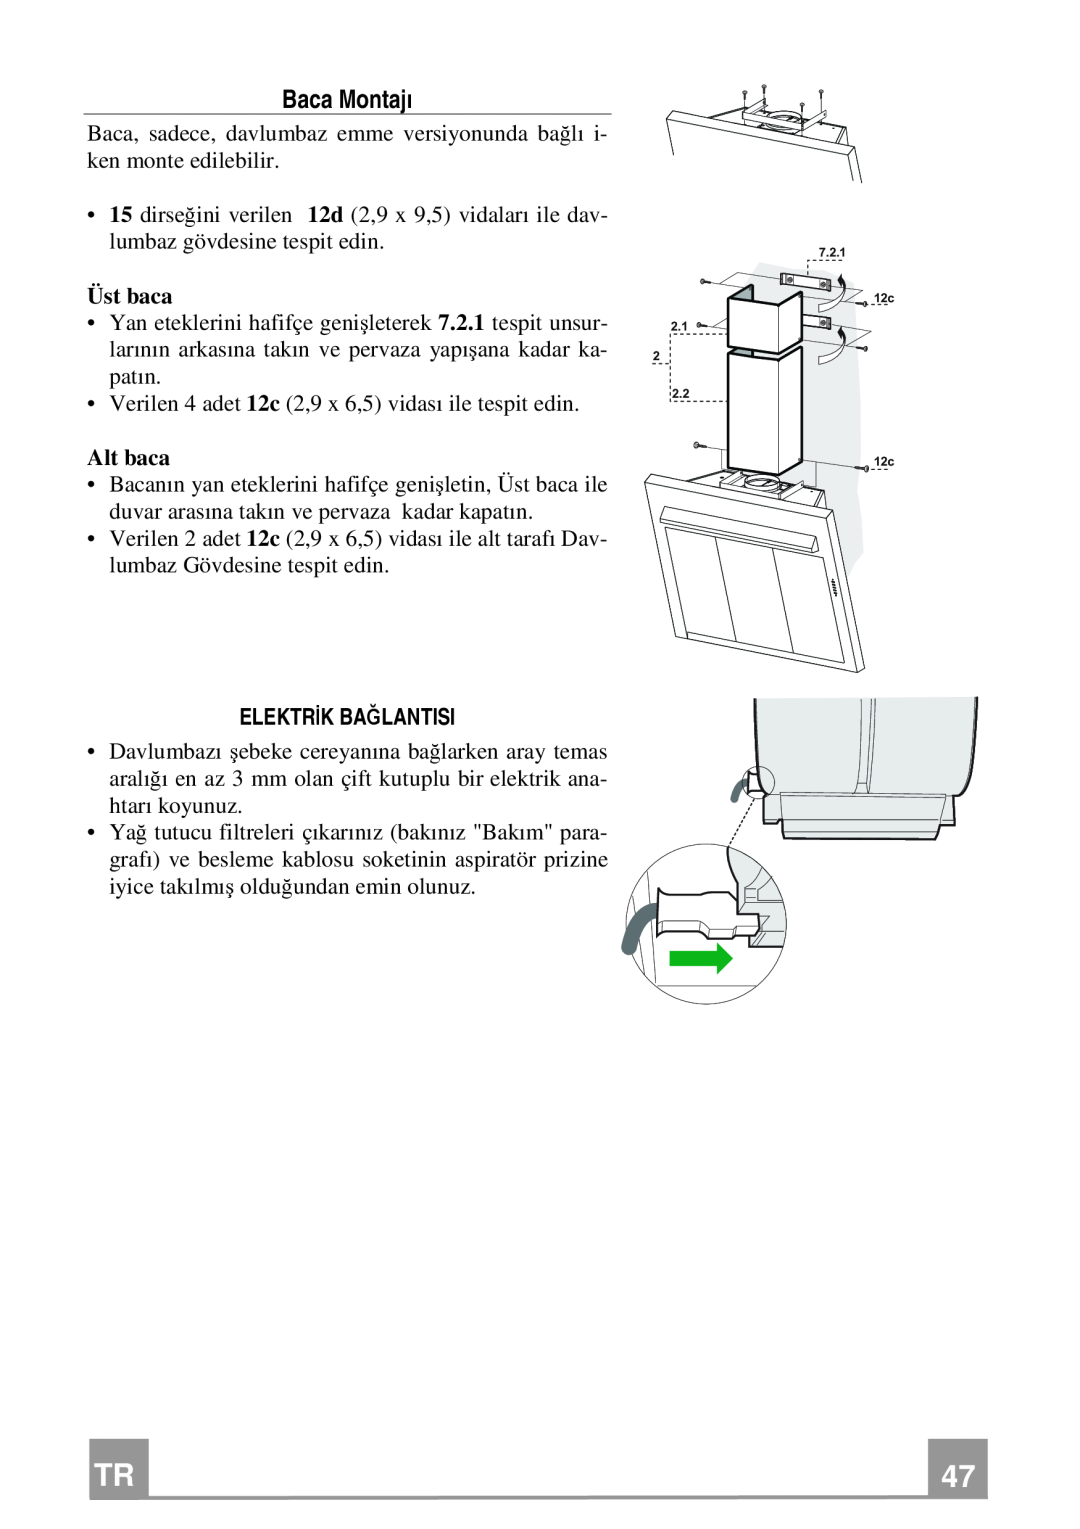 Franke Consumer Products FQD 907 manual Baca Montajı, Elektrik Bağlantisi 